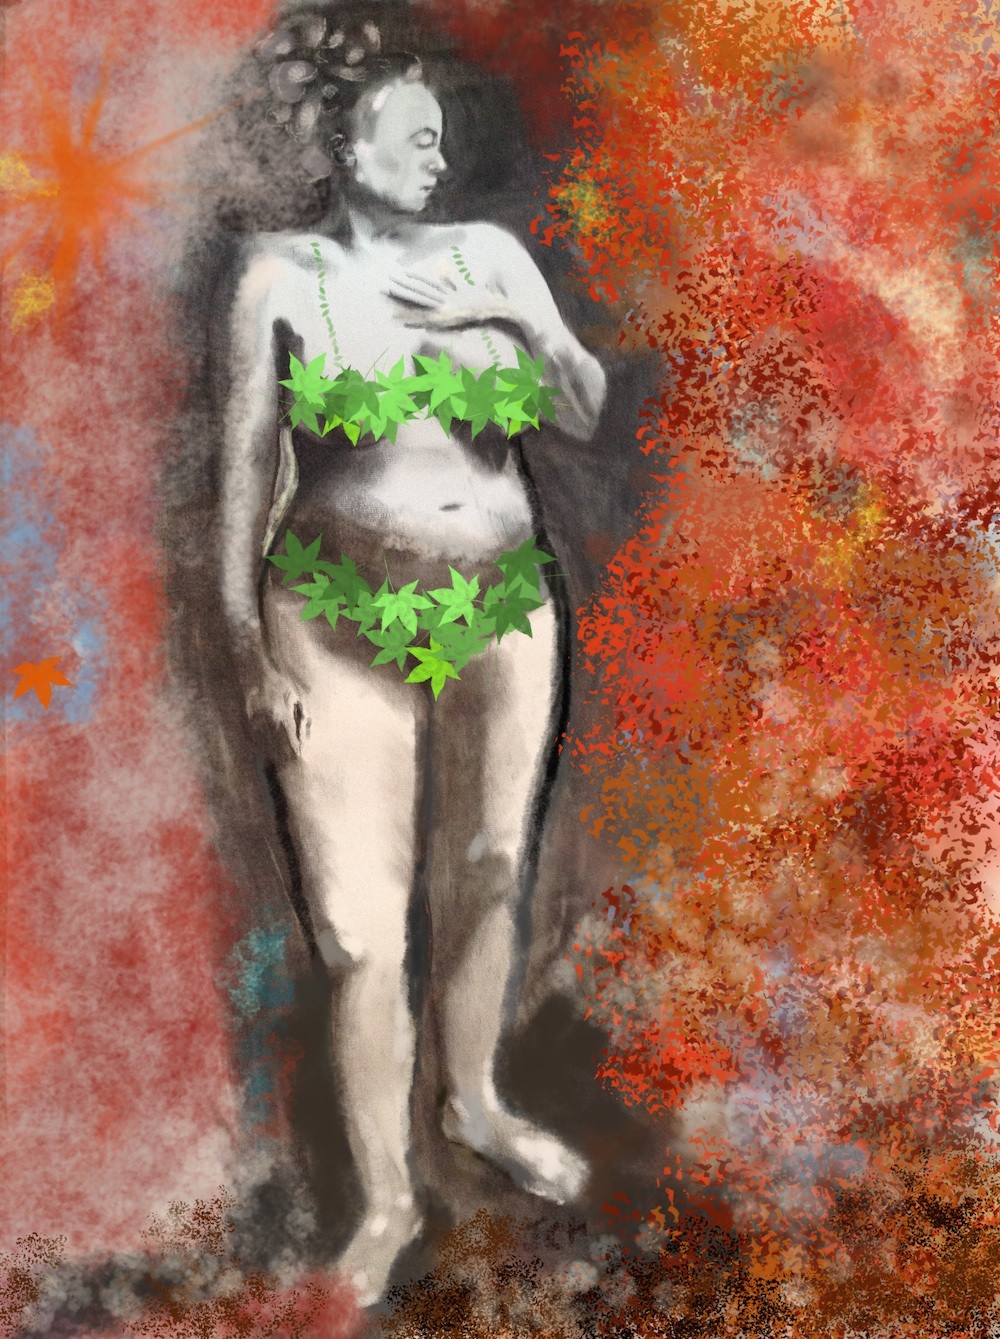 Big Nude in a Leaf Bikini - charcoal with computer paint